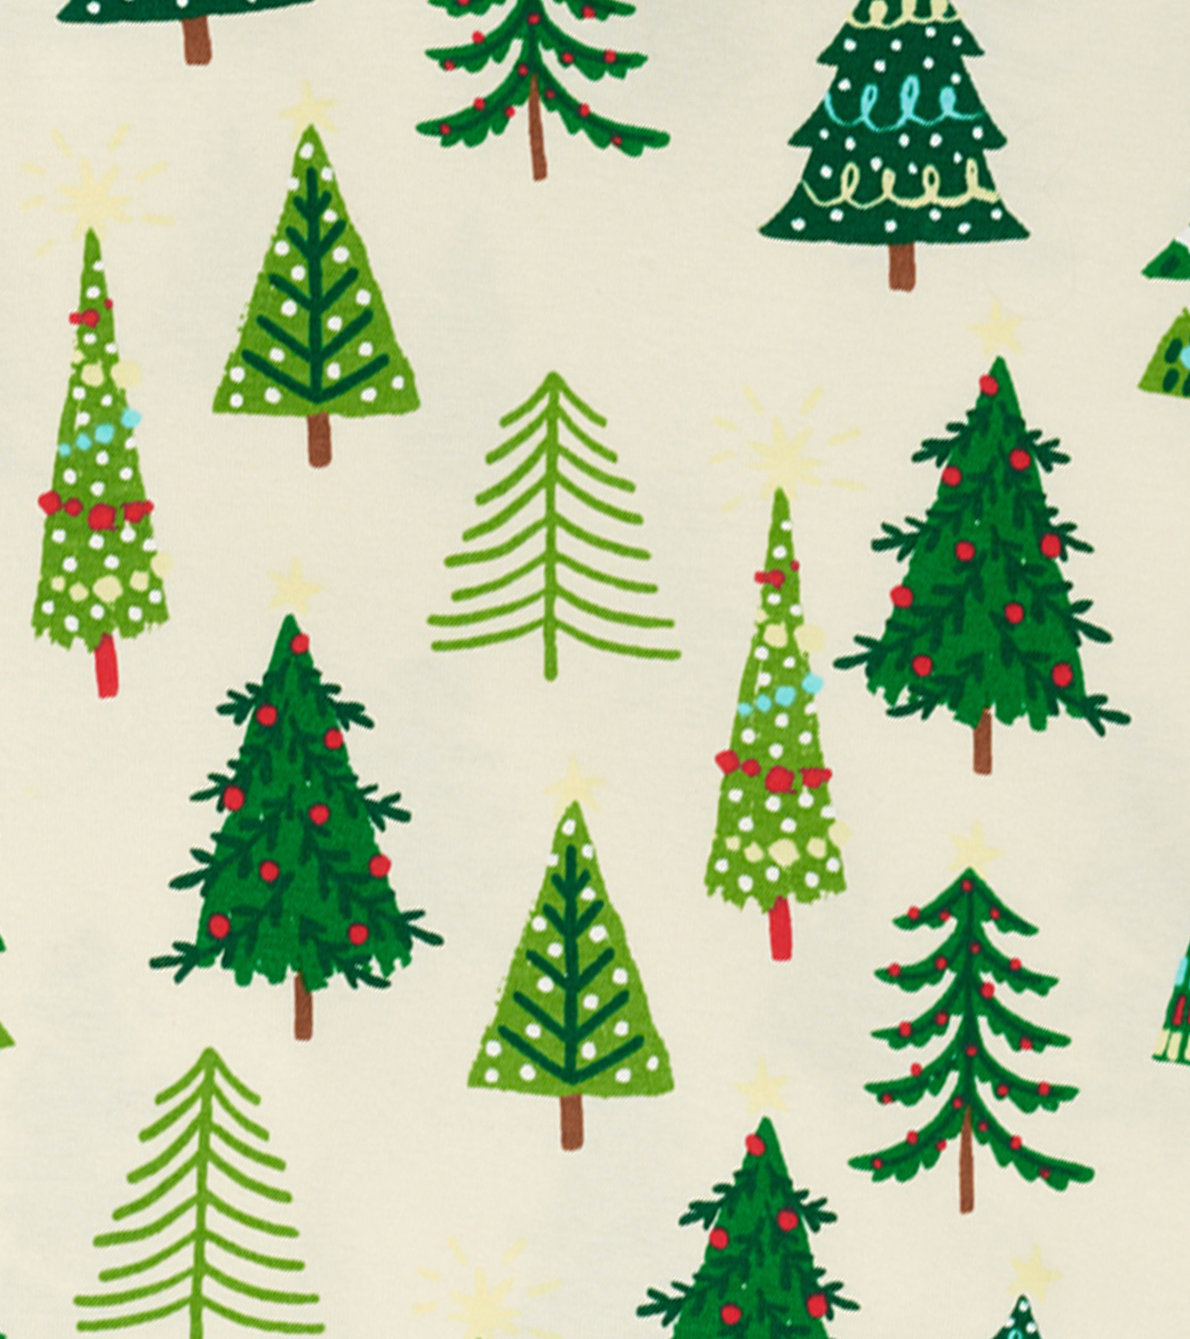 View larger image of Christmas Trees Glow In The Dark Men's Pajama Set